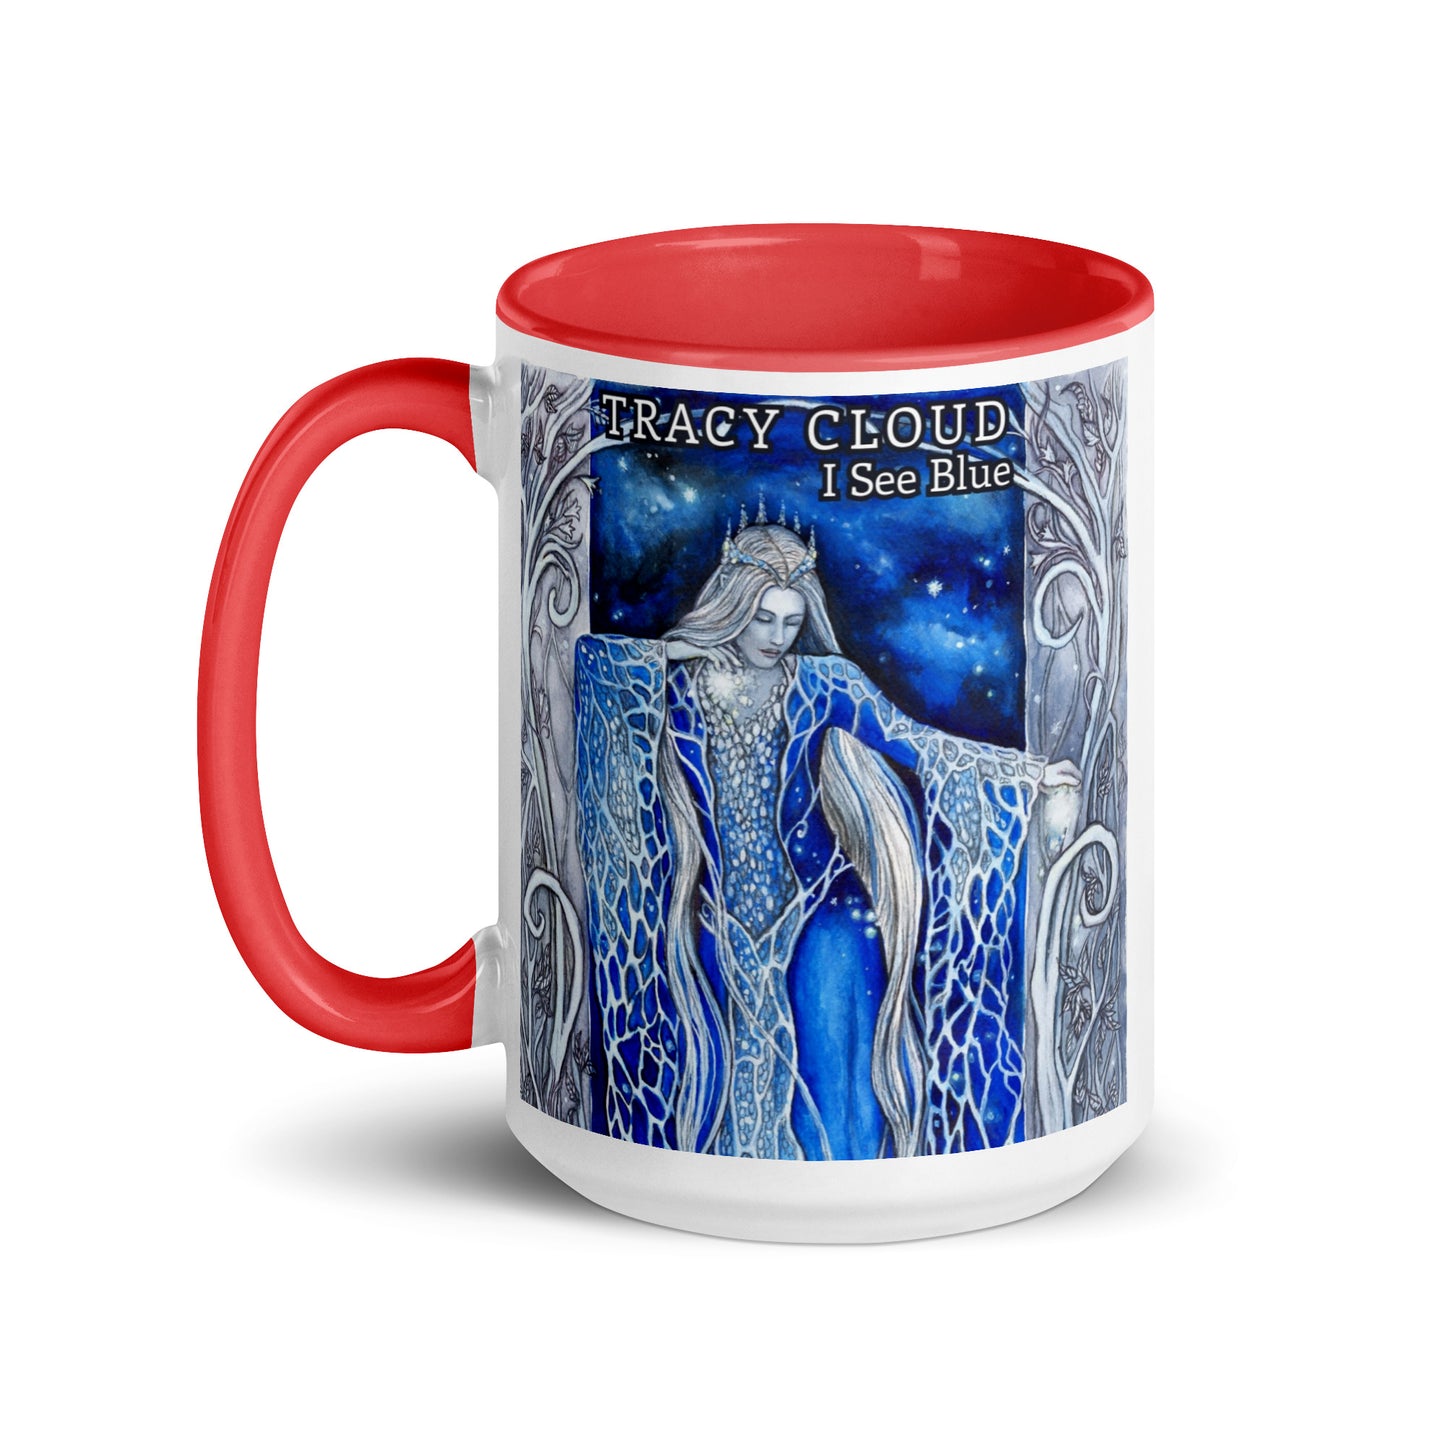 Tracy Cloud - I See Blue Mug With Color Inside